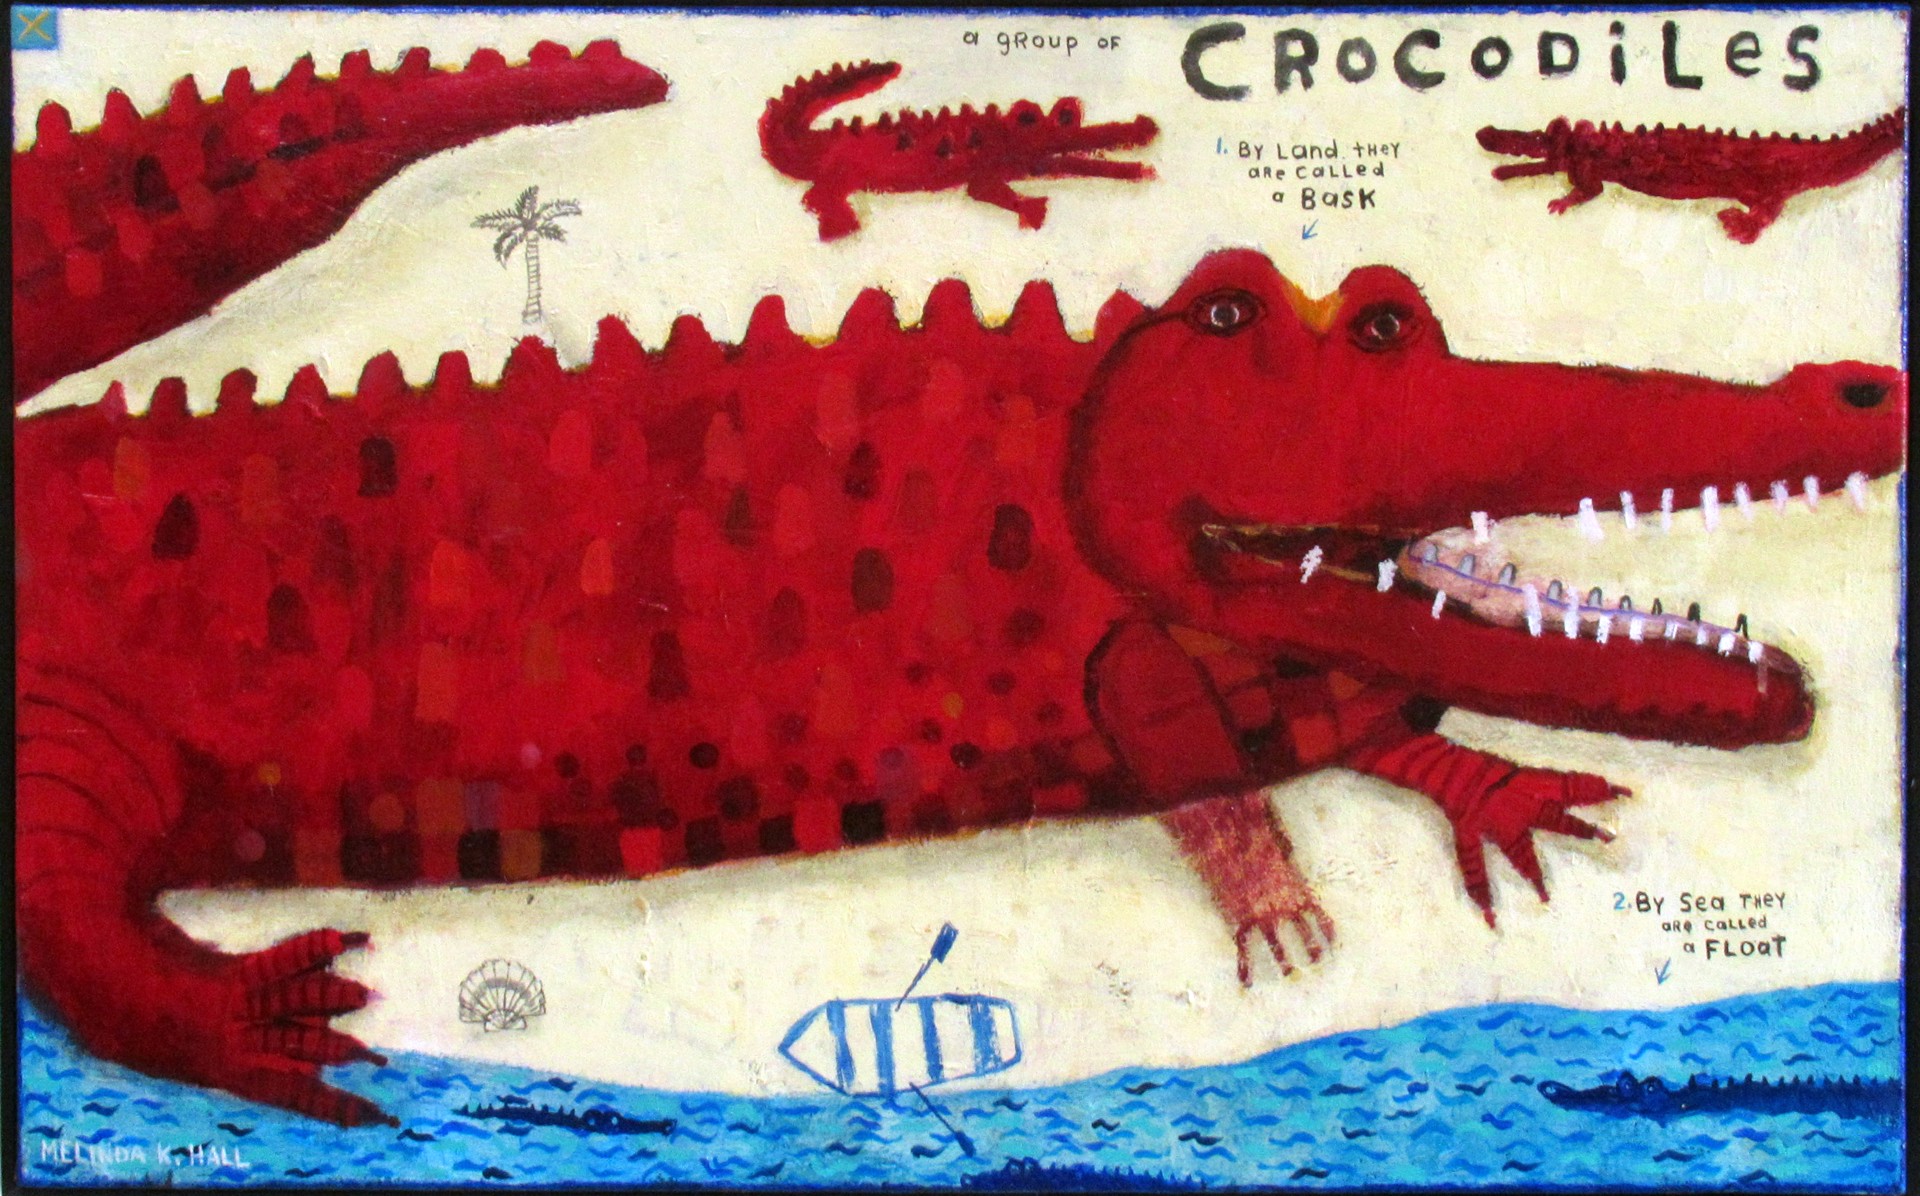 Crocodiles:   A Bask and a Float by Melinda K. Hall